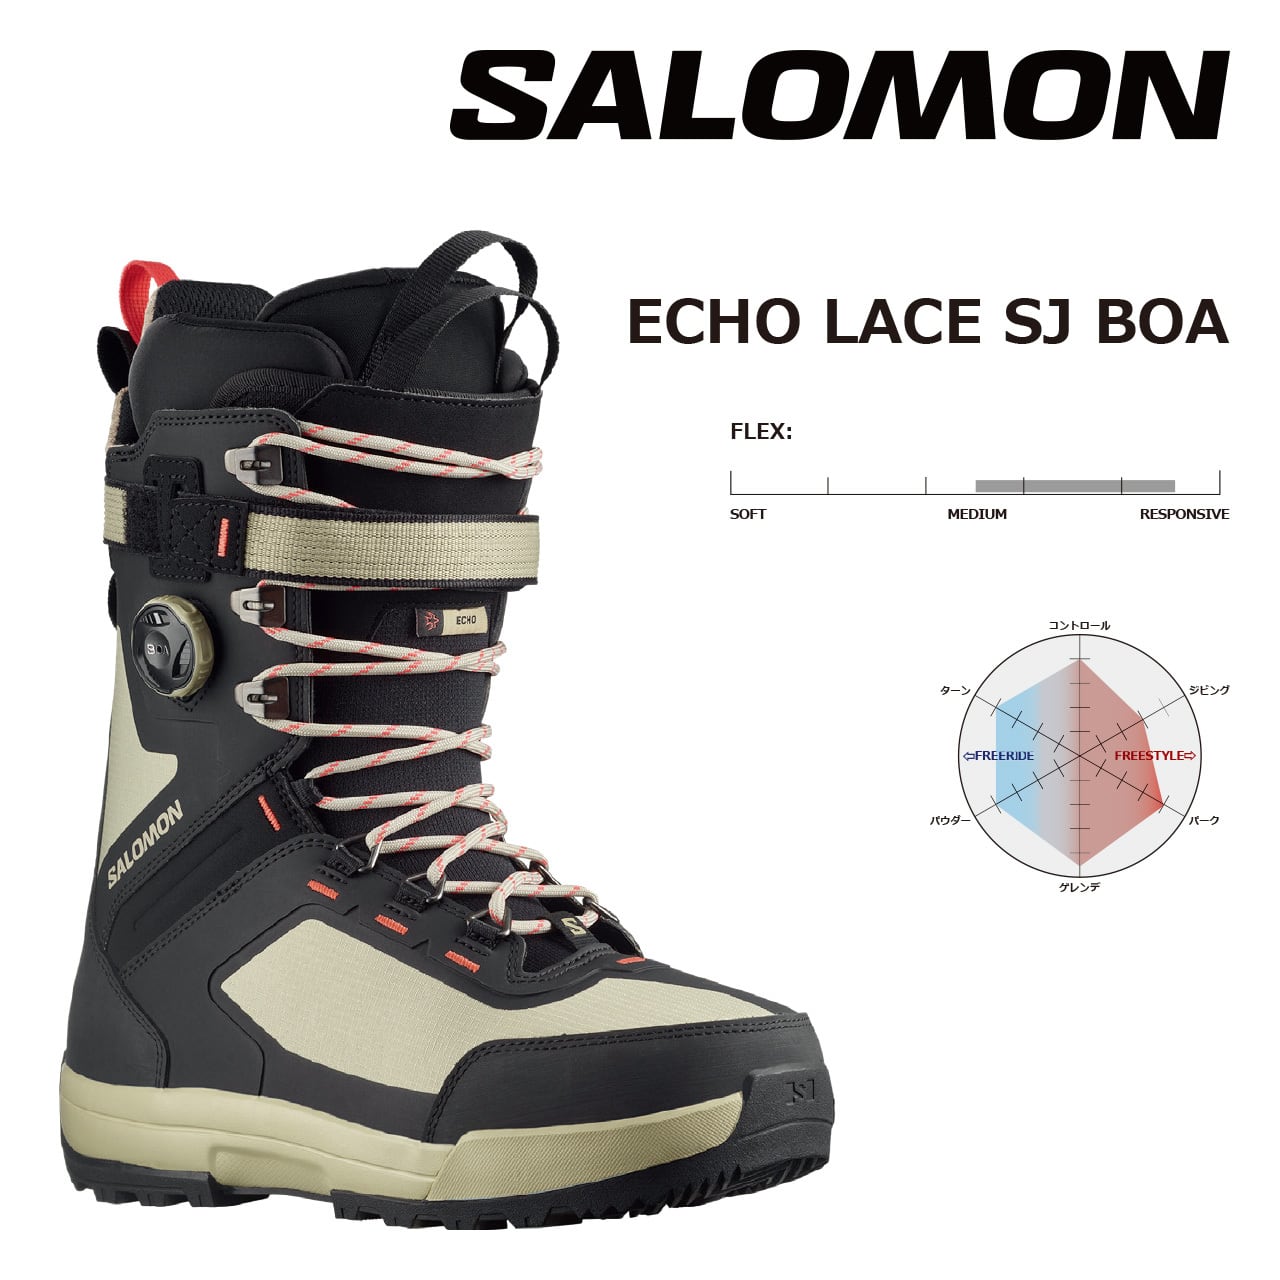 SALOMON ECHO LACE SJ BOA 22-23 26.5cm